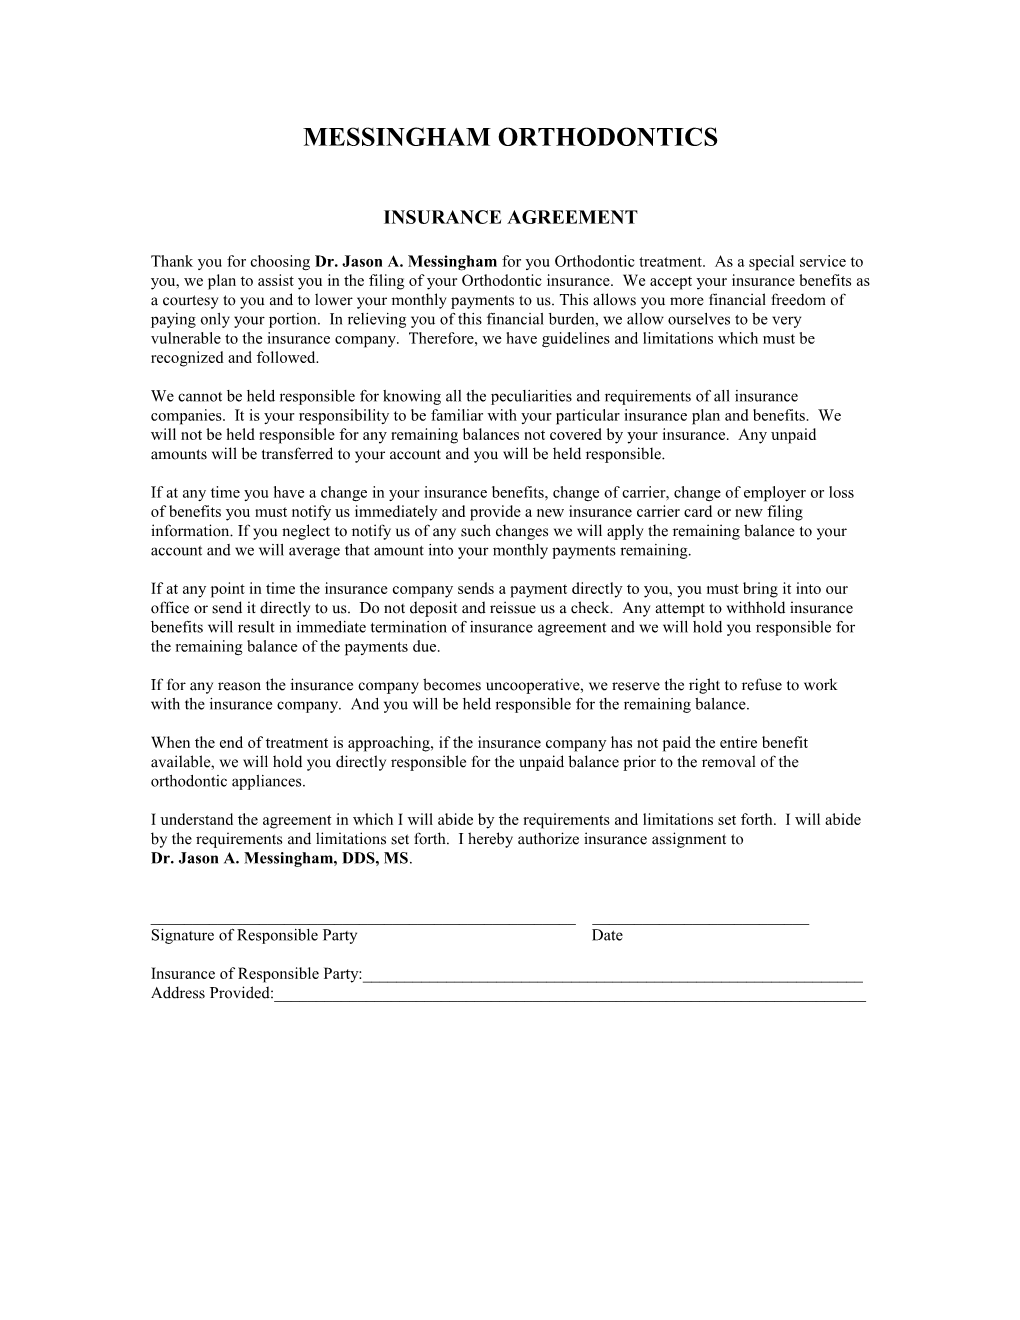 Insurance Agreement